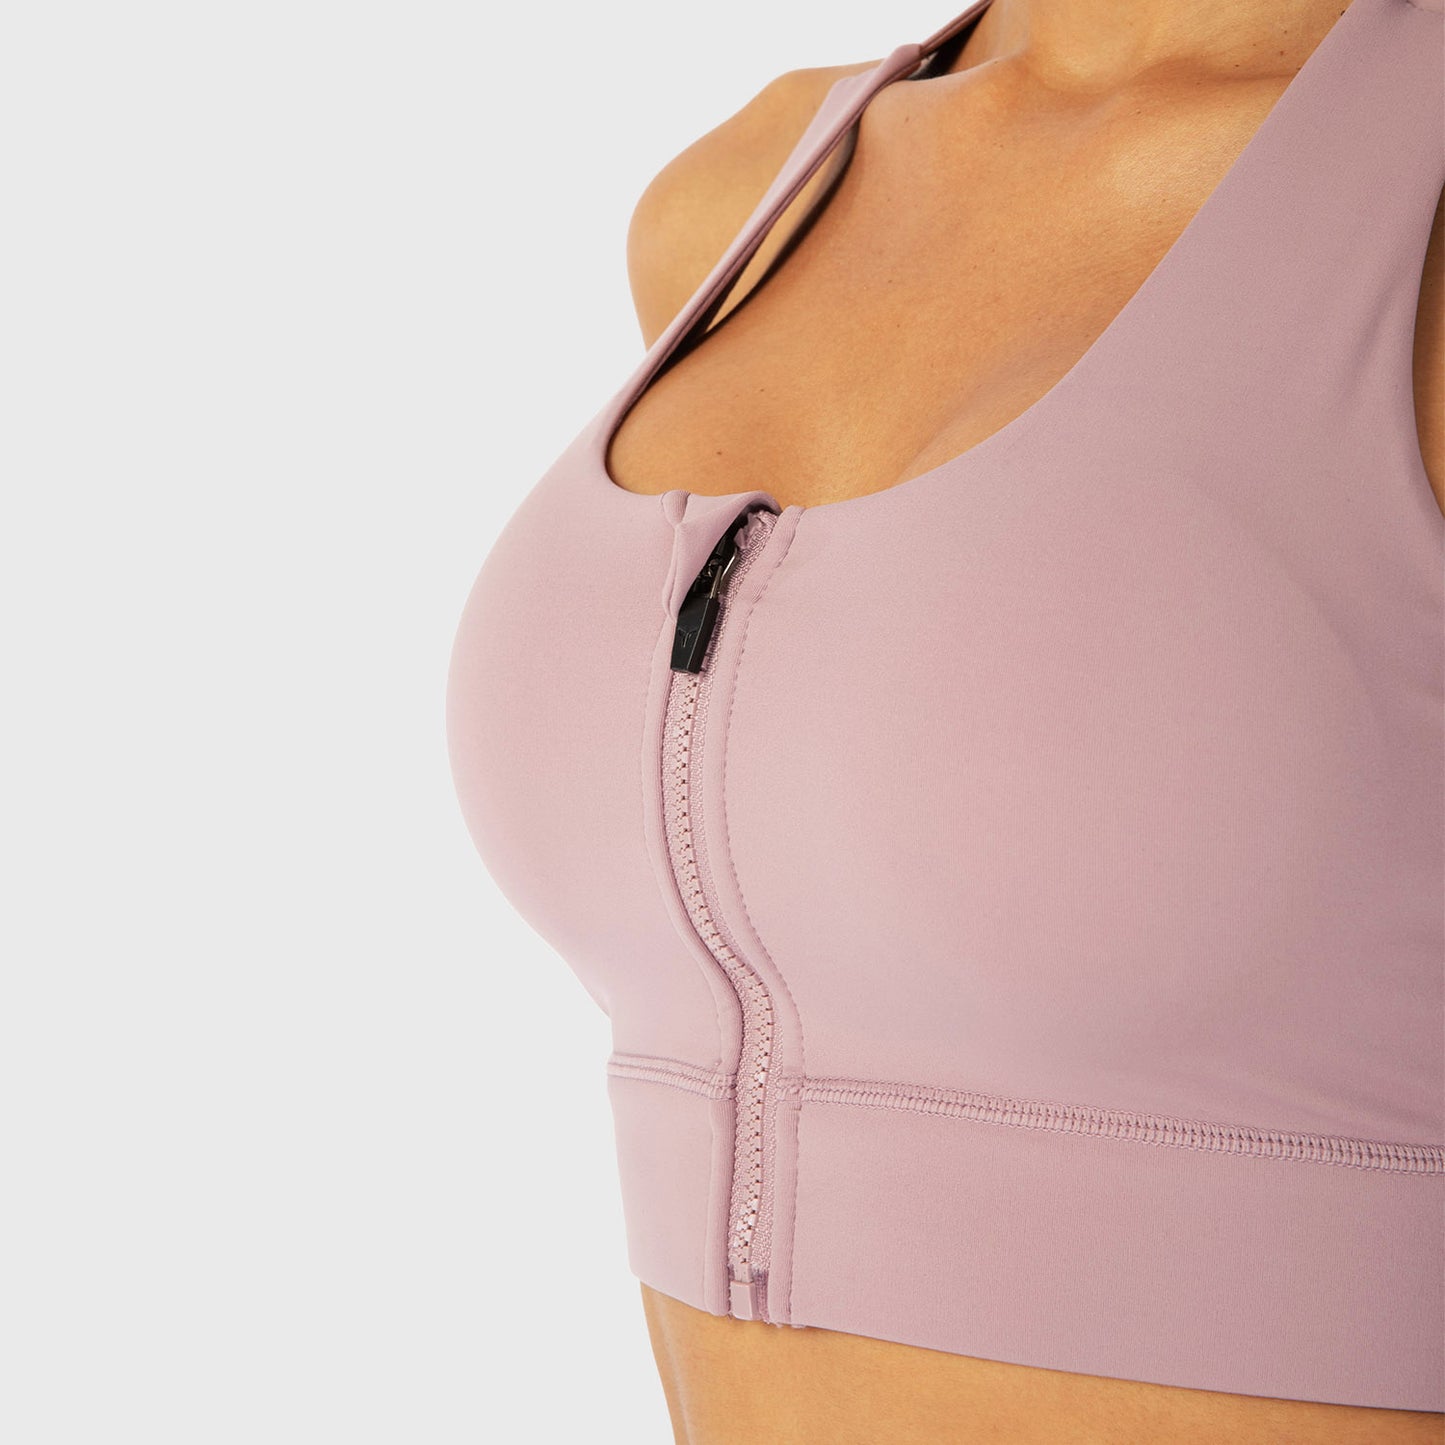 squatwolf-workout-clothes-infinity-zip-up-workout-bra-pink-medium-impact-bra-sports-bra-for-gym